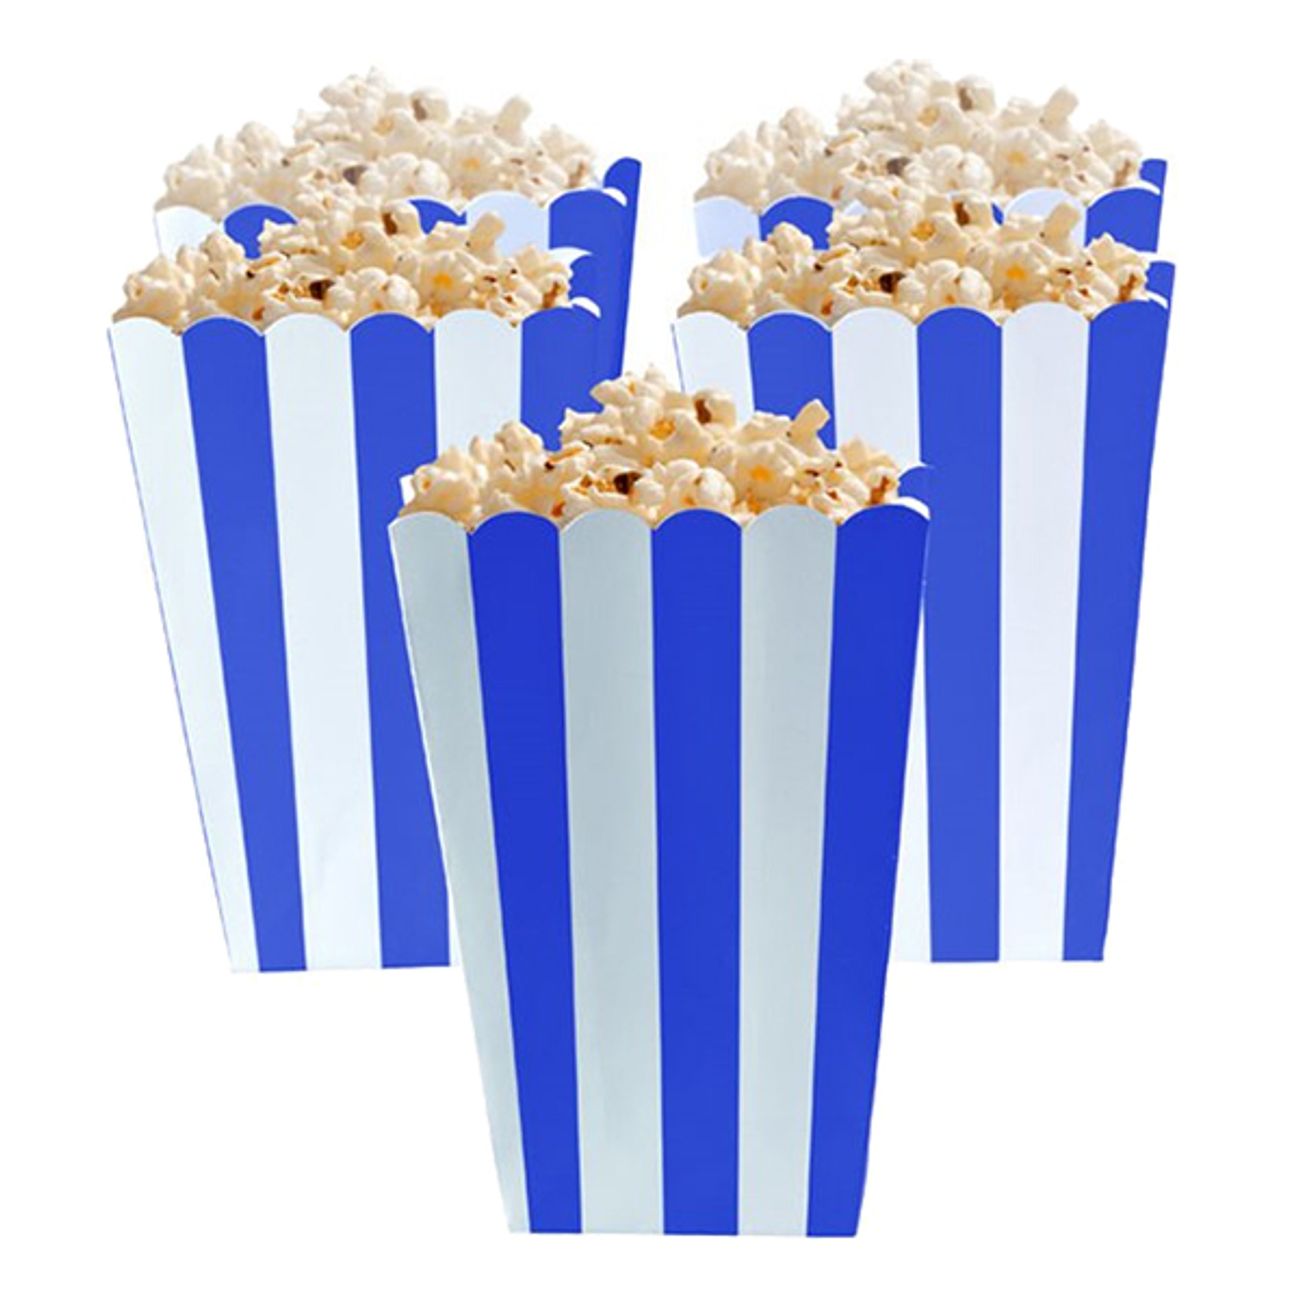 popcornbagare-morkbla-randiga-1